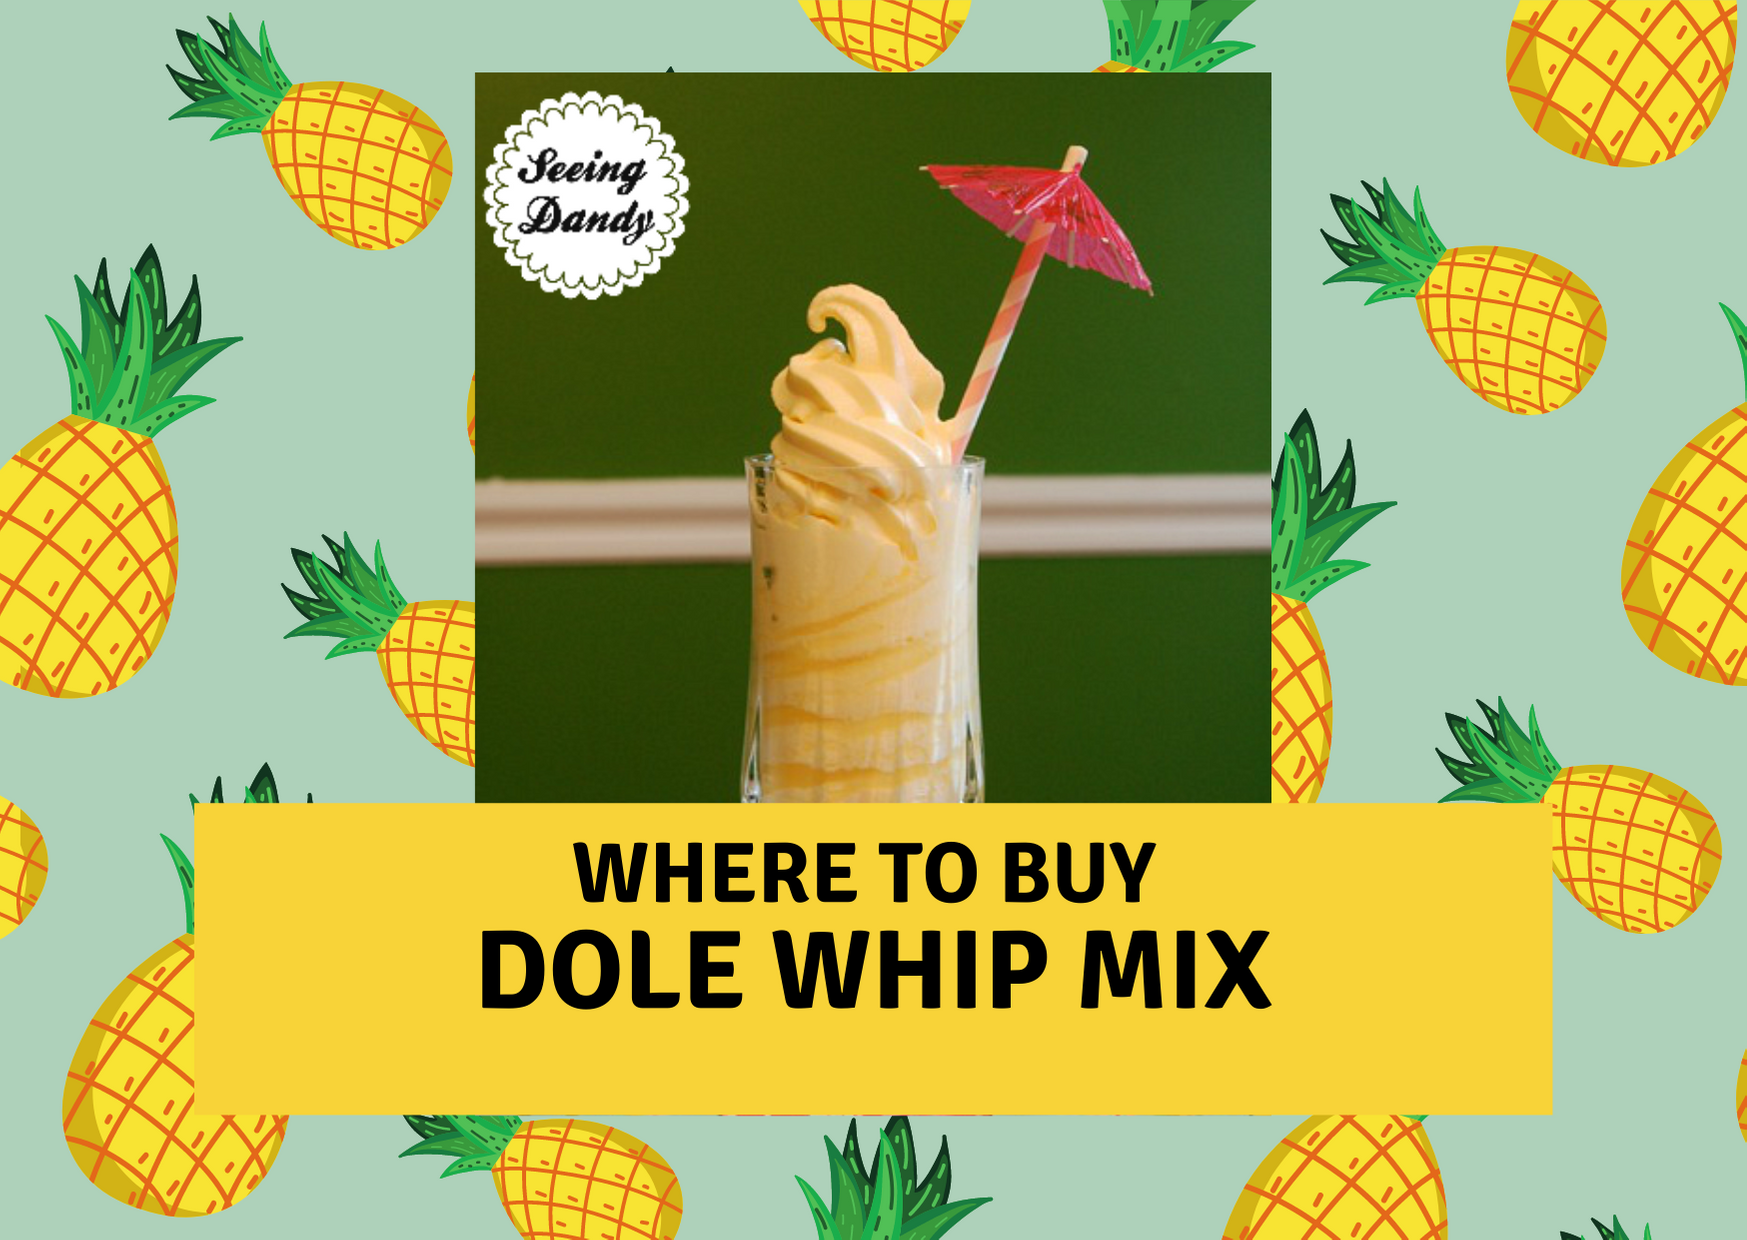 dole whip mix, disney treats, disney world, disneyland, disney favorites, disney family, disney food, disney travel, pineapple ice cream